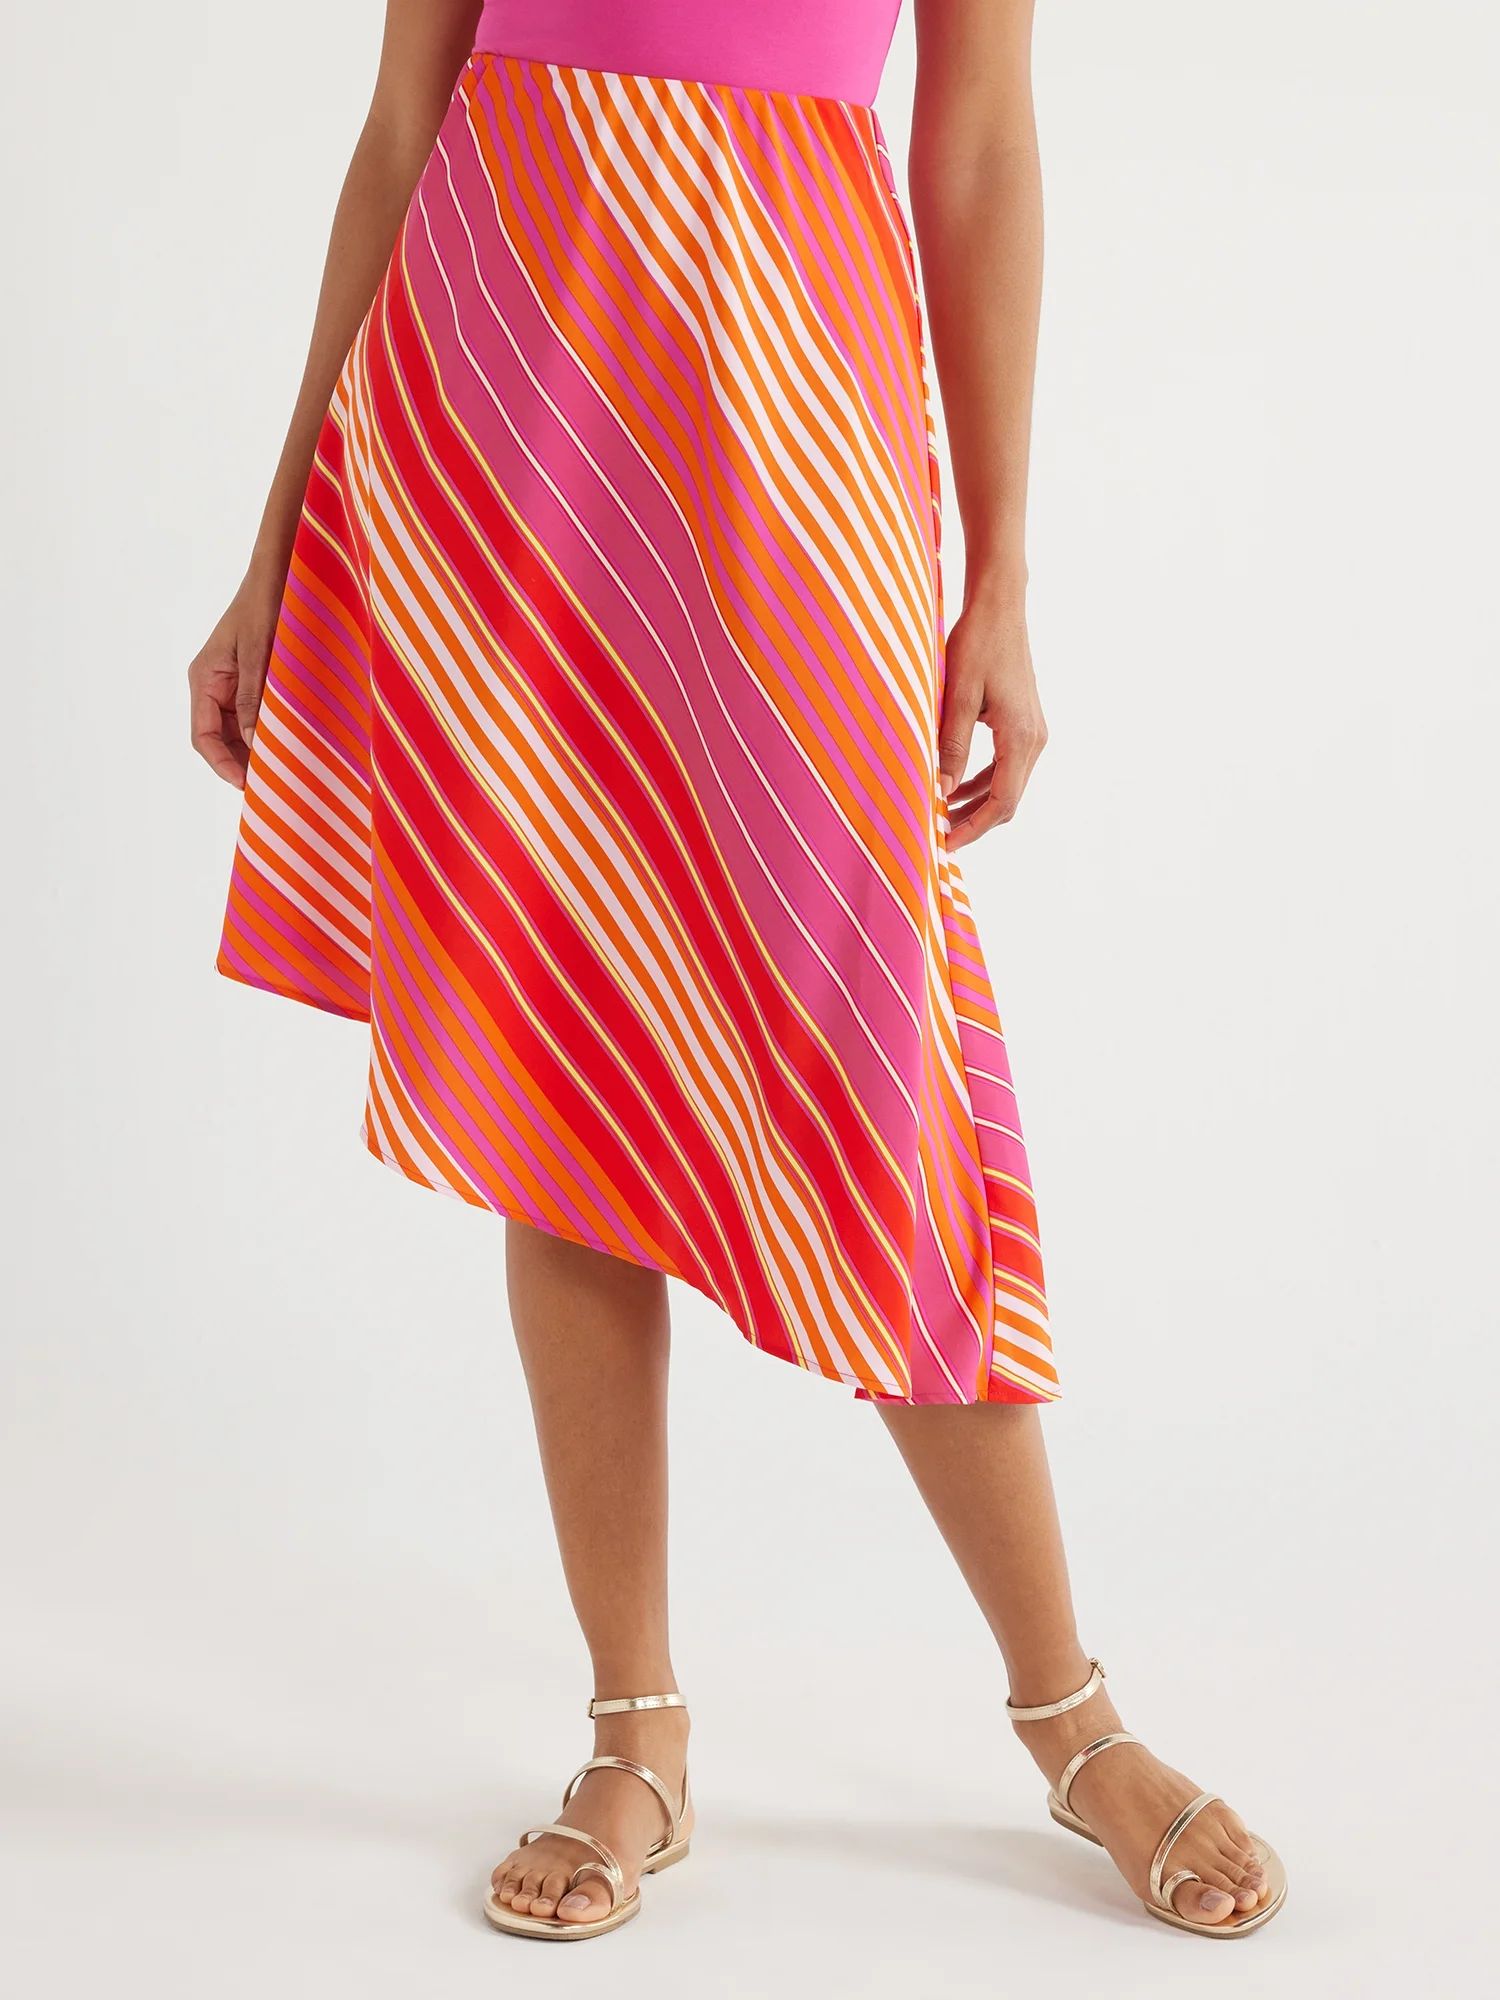 Scoop Women’s Asymmetrical Pull On Midi Skirt, Sizes XS-XXL | Walmart (US)